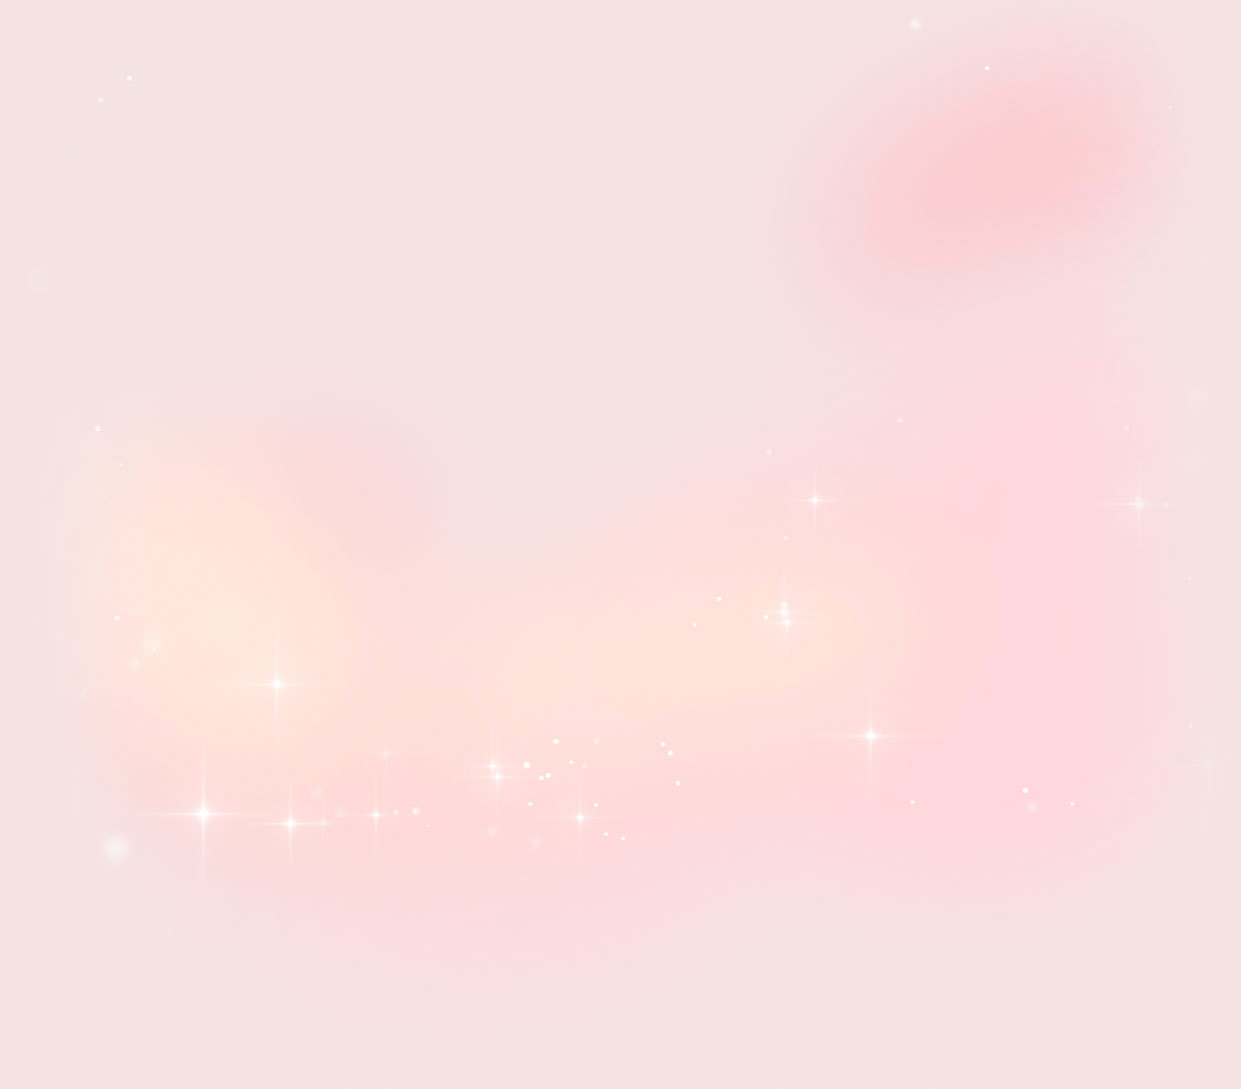 http://www.princesapop.com/modules/common/img/pink-light-background.jpg